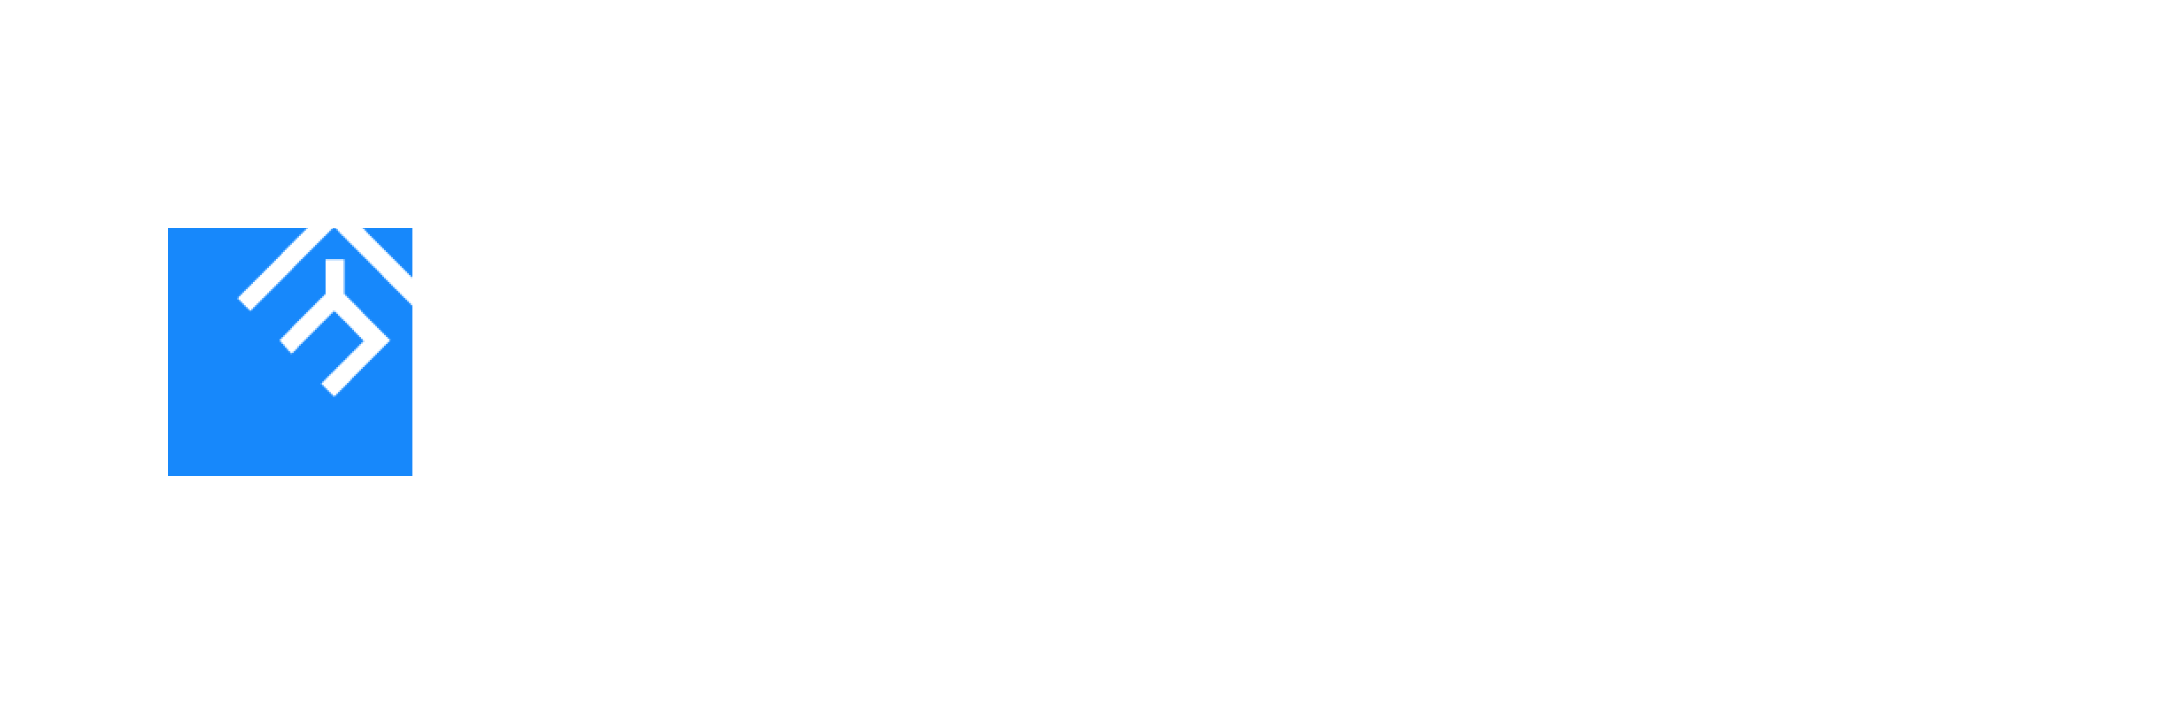 Sharding Capital